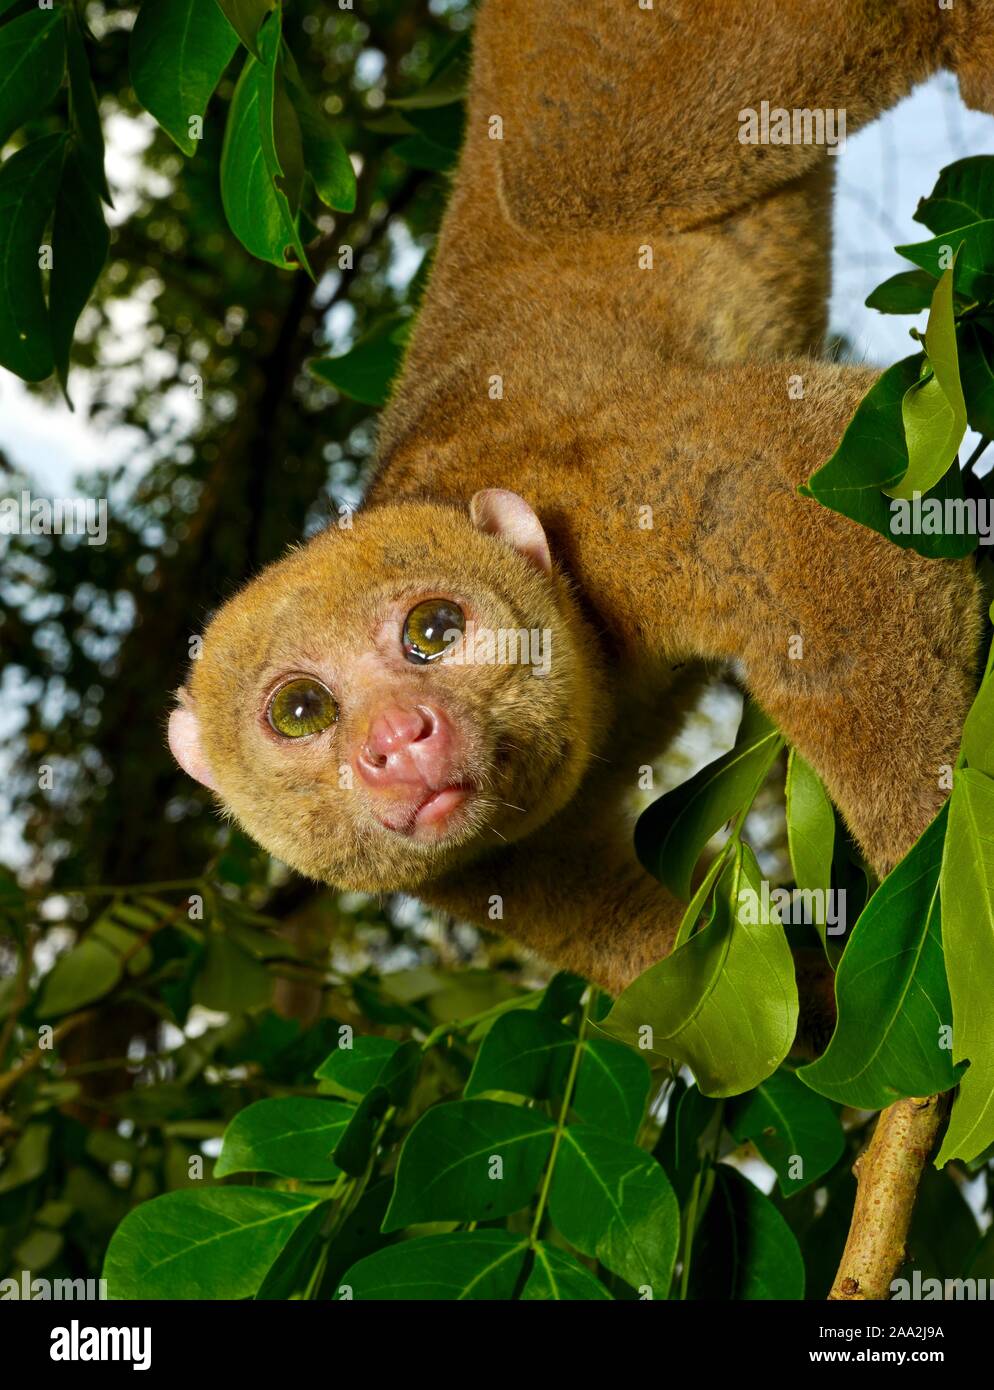 https://c8.alamy.com/comp/2AA2J9A/bosmans-potto-perodicticus-potto-climbing-in-a-tree-animal-portrait-togo-2AA2J9A.jpg